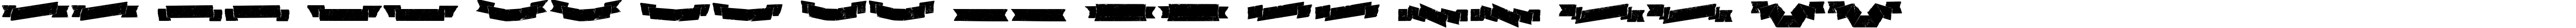 Пример написания английского алфавита шрифтом Adhesive Nr. Seven Banners